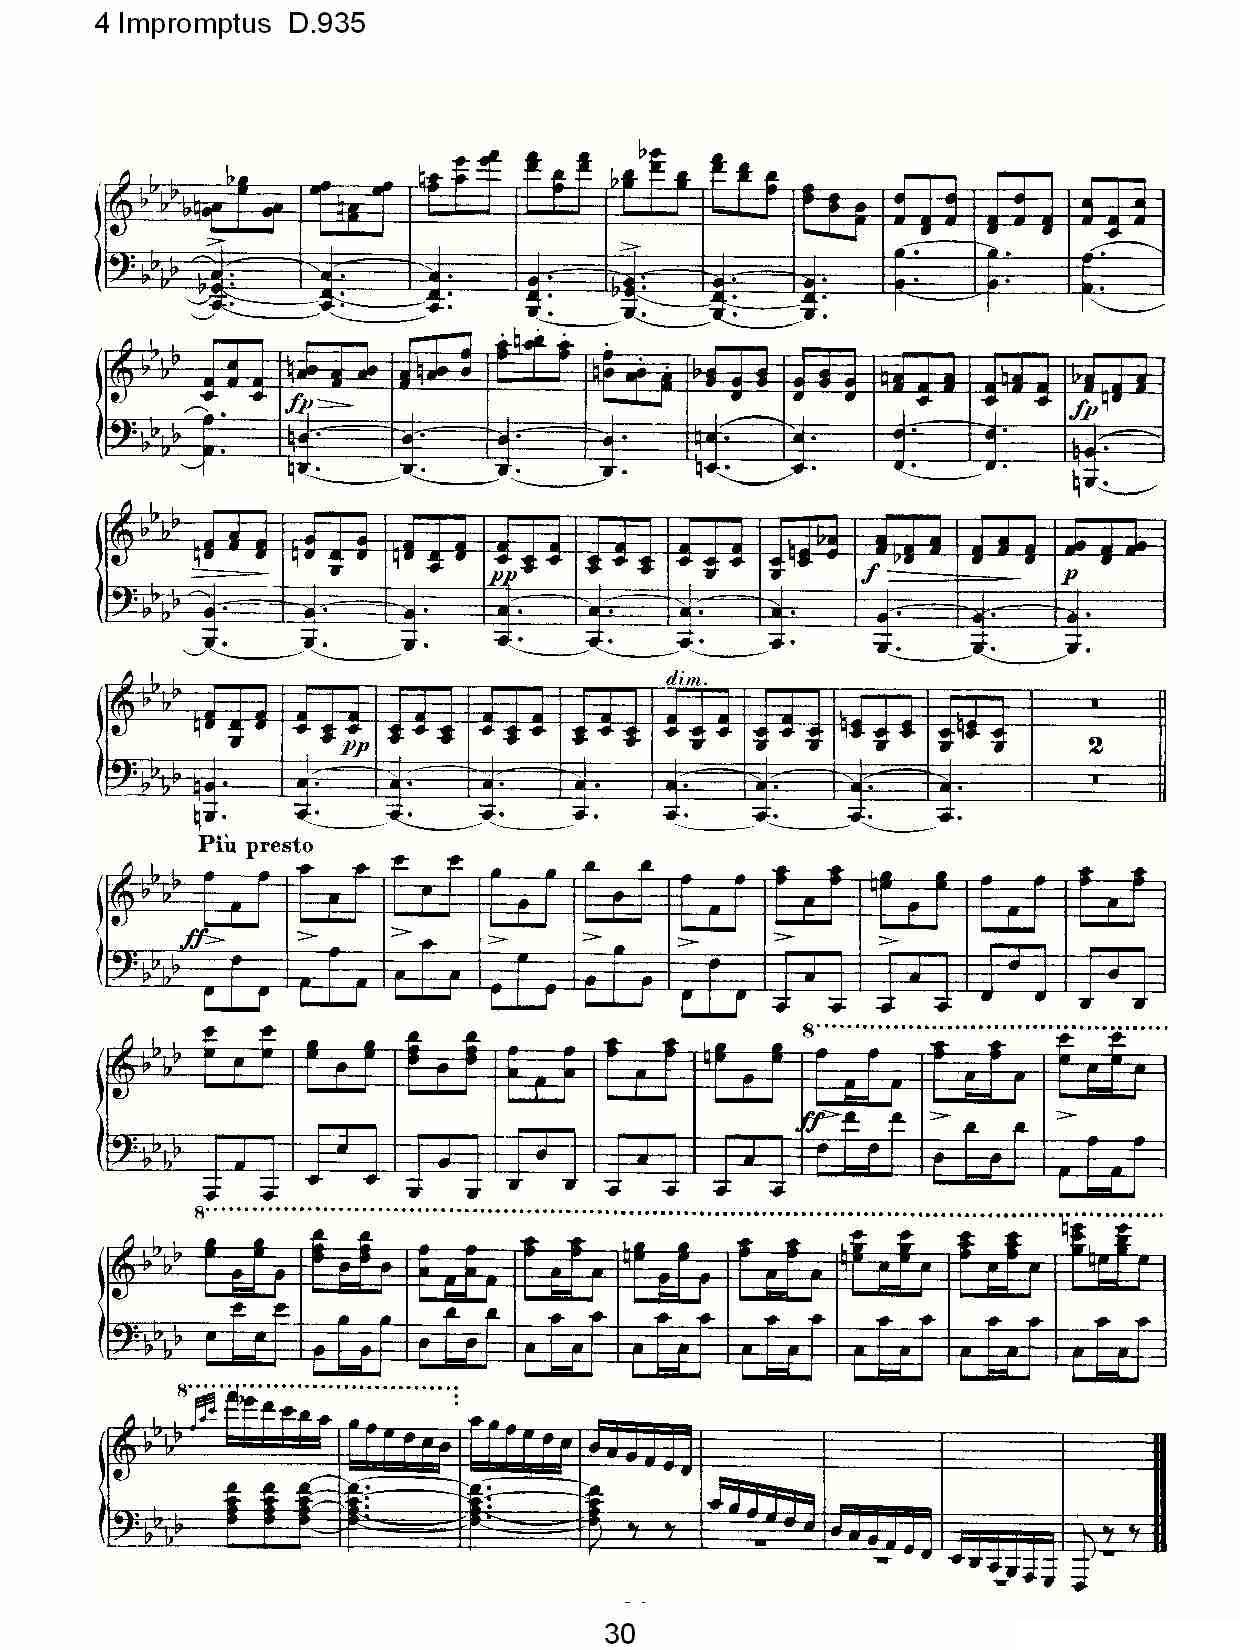 4 Impromptus D.935（4人即兴演奏D.935）钢琴曲谱（图30）